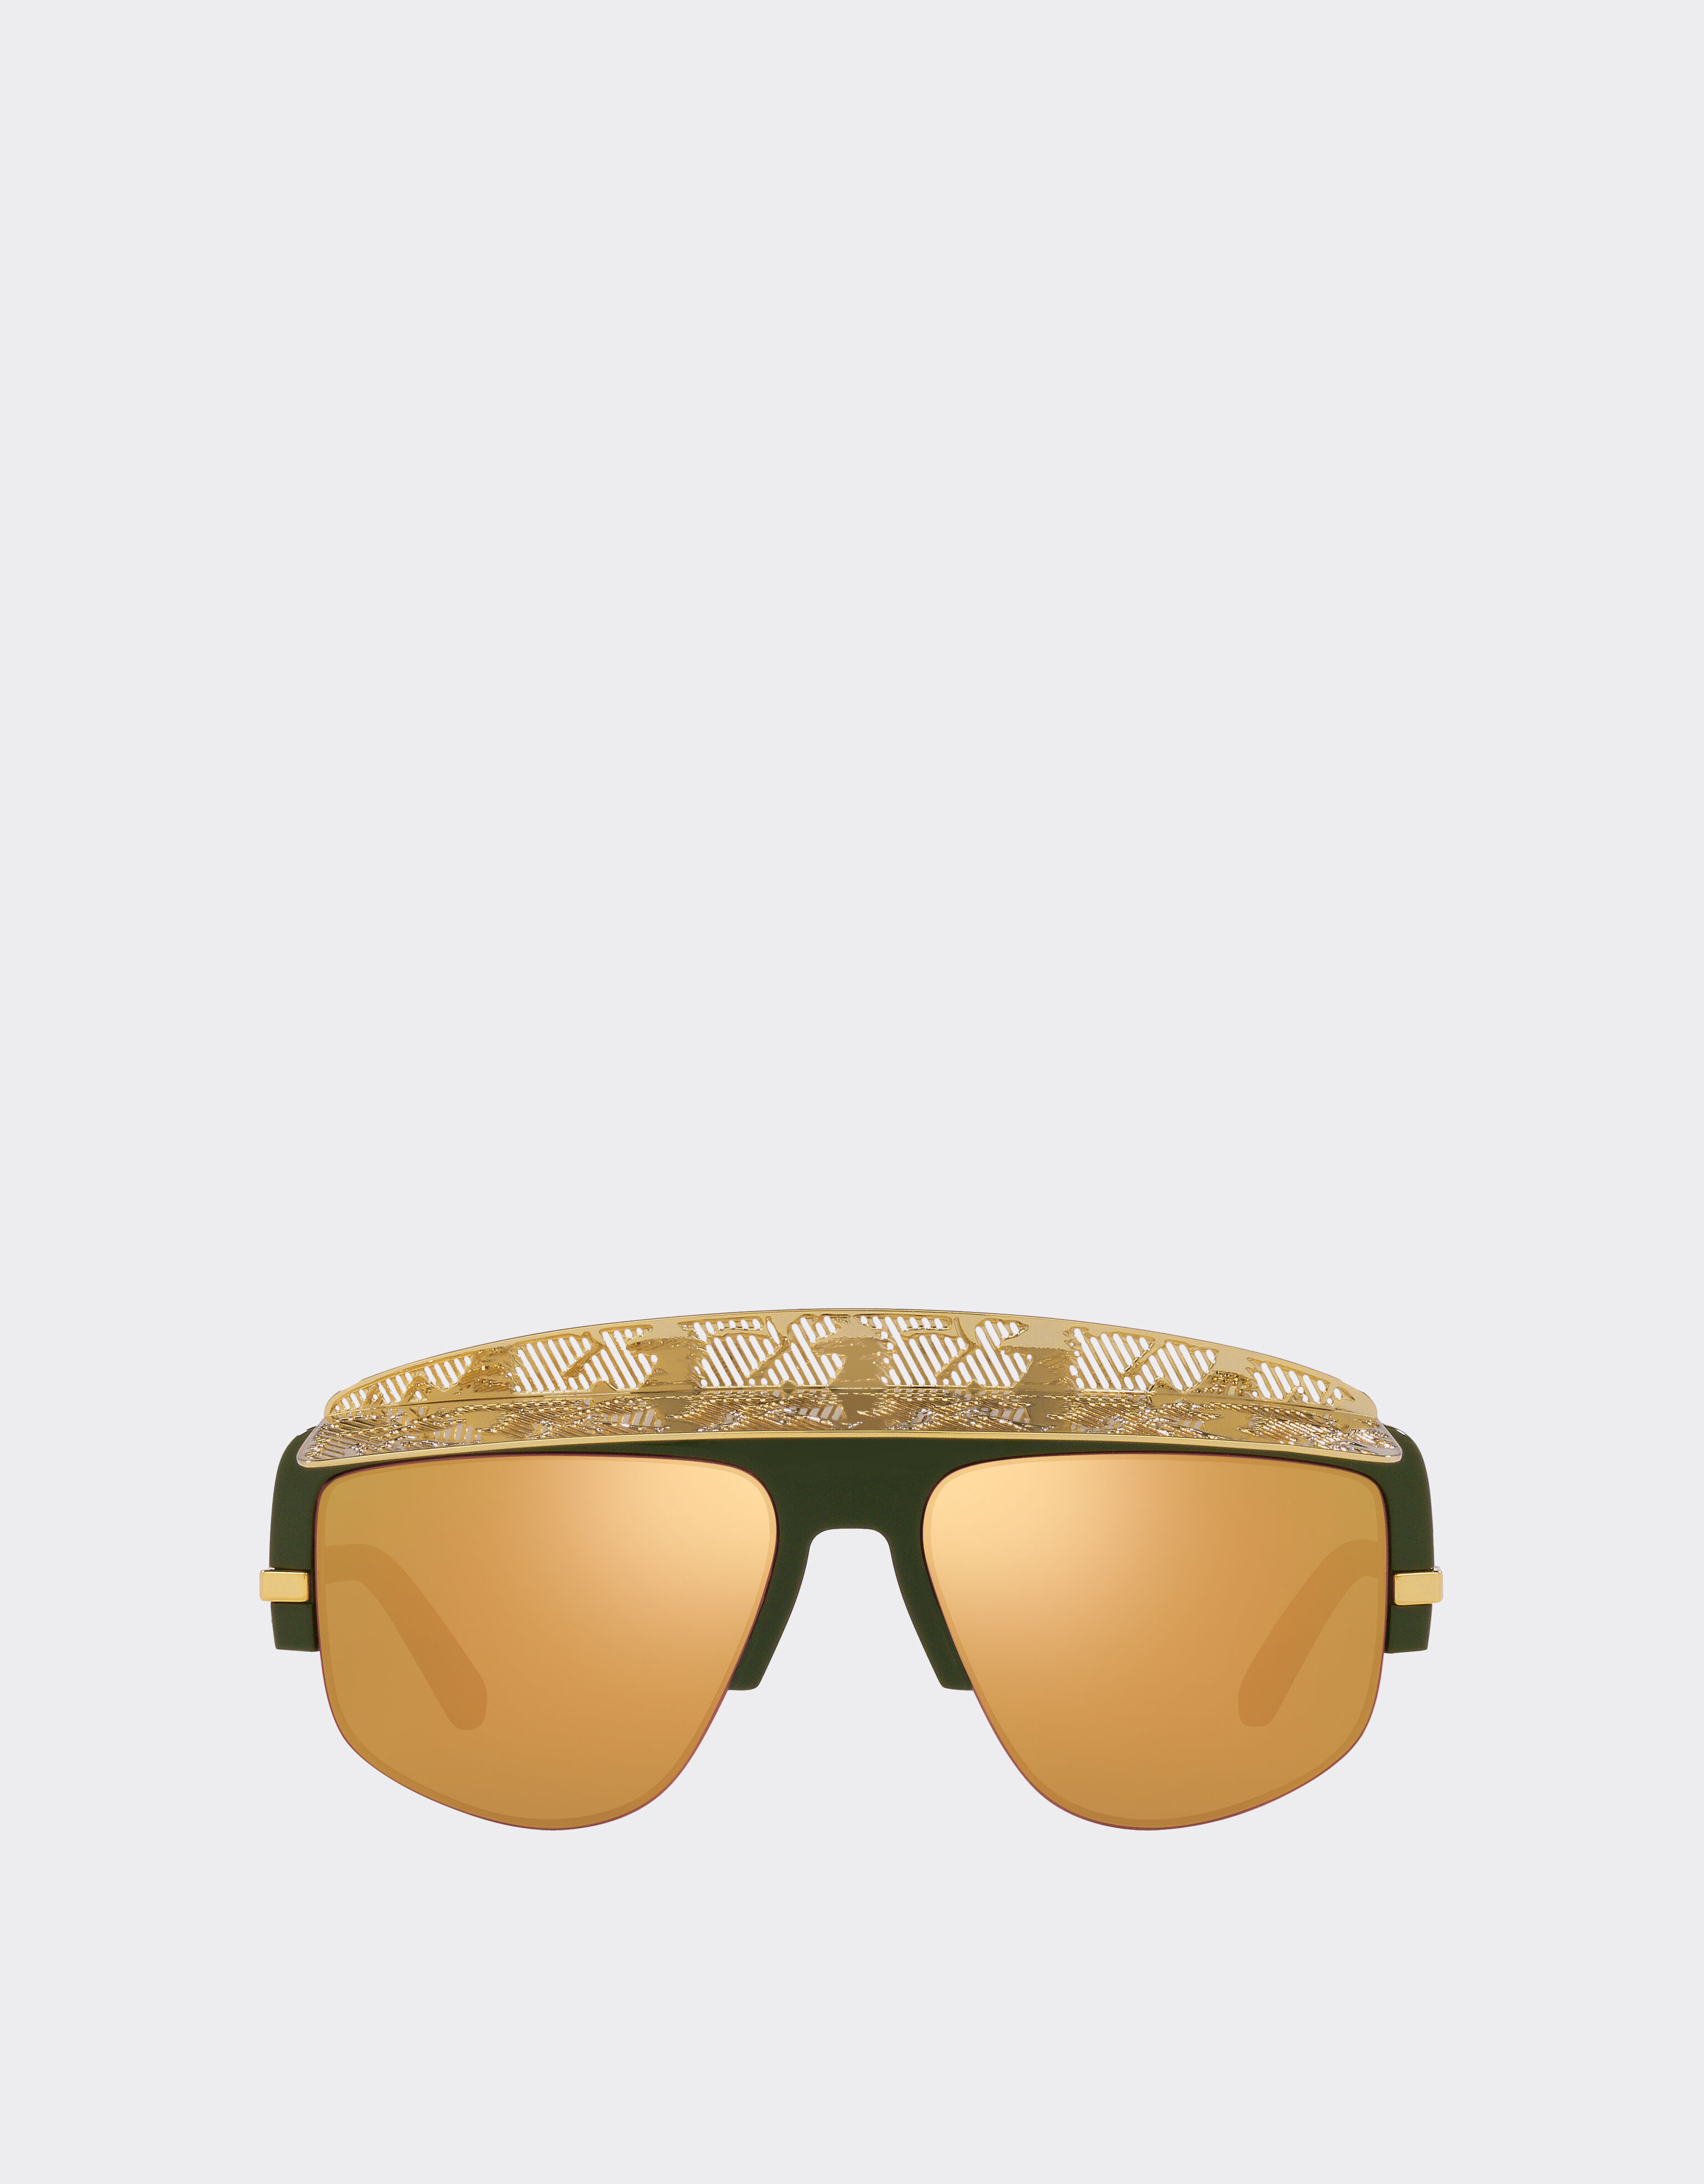 Ferrari Ferrari sunglasses with gold mirror lens Dark Green F0826f